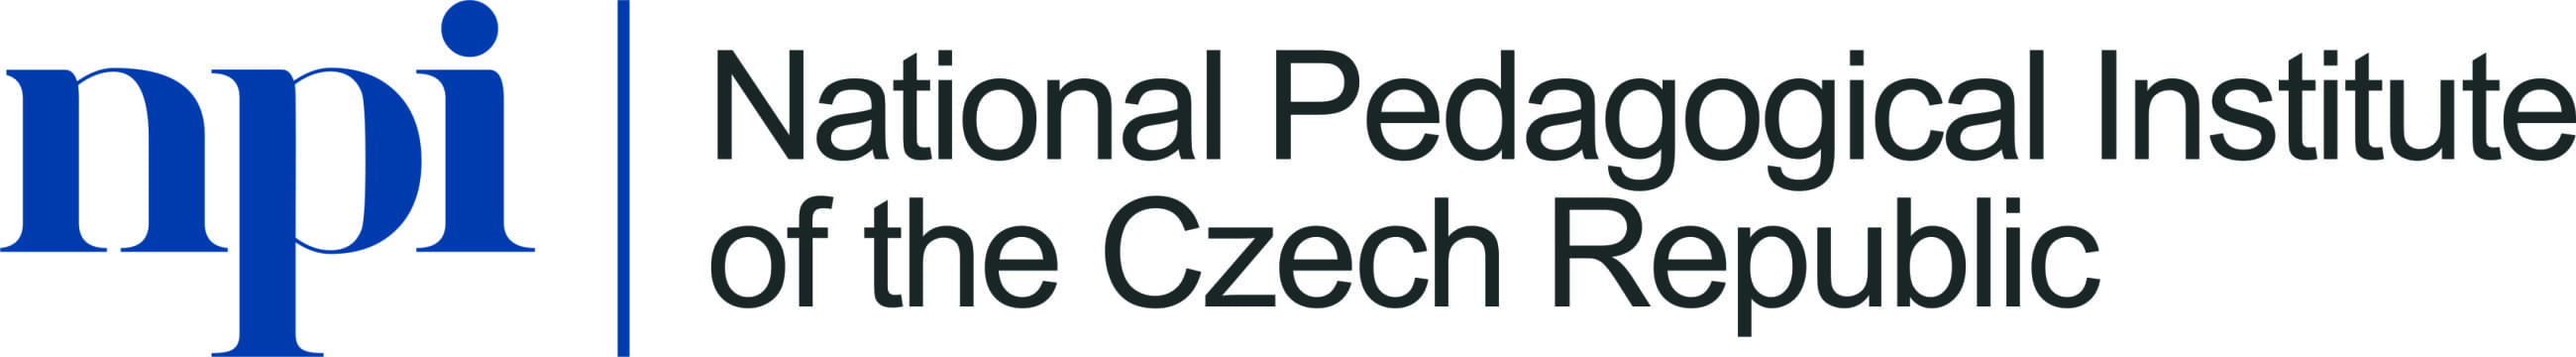 National Pedagogical Institute of the Czech Republic